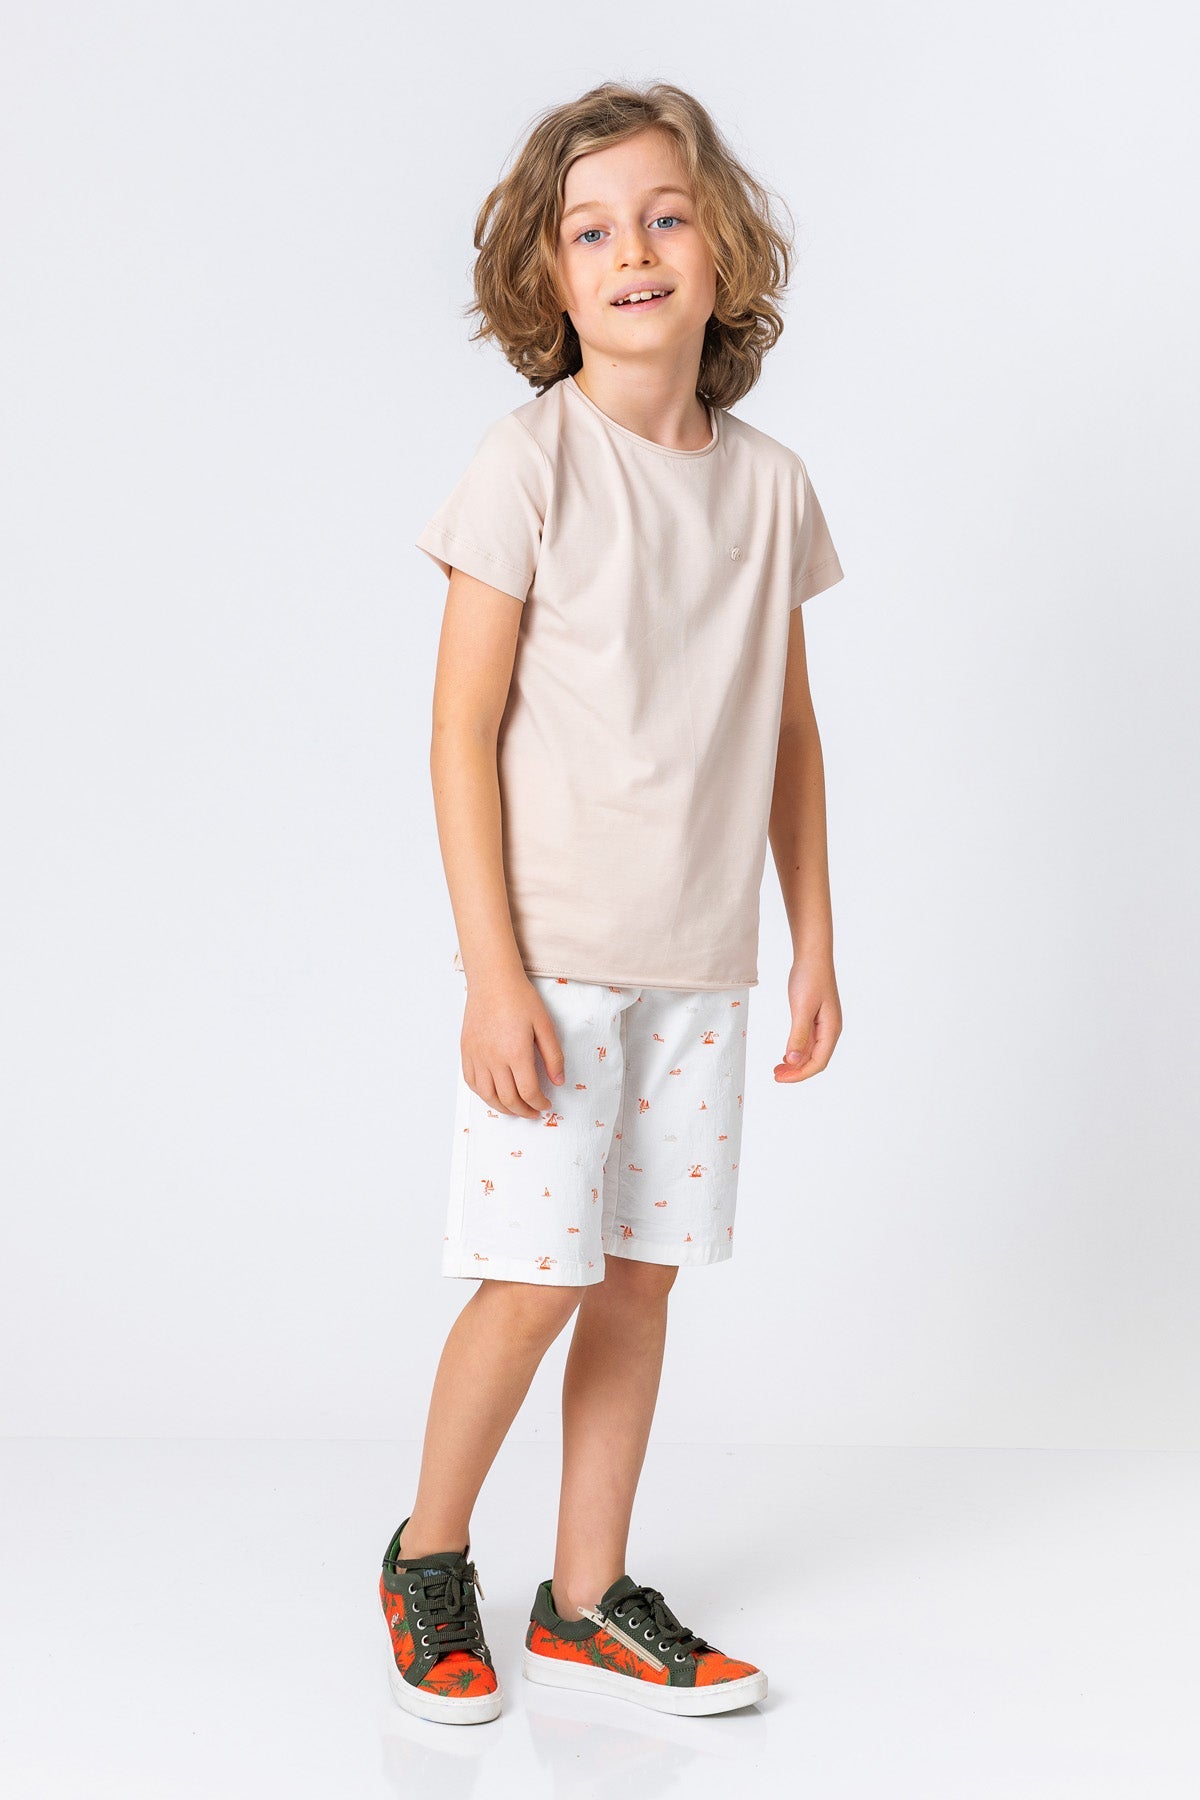 InCity Kids Boys Plain Solid Round Neck Short Sleeve Basic T-Shirt